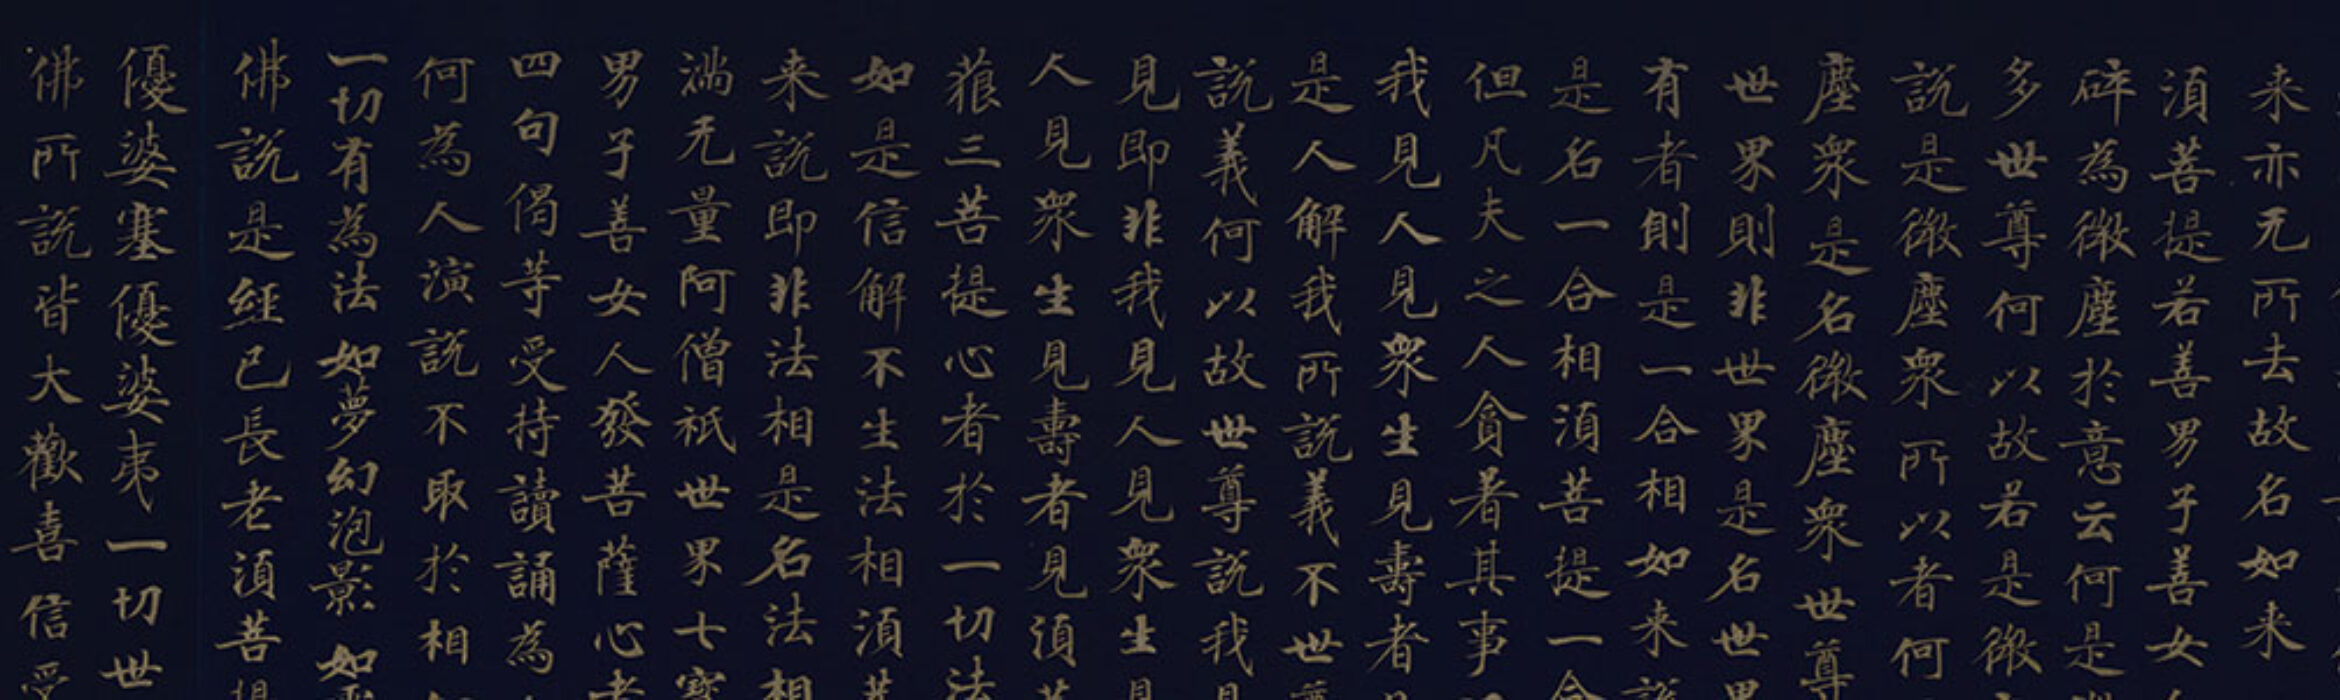 Eighth Volume Of Hualin Translation Series On Buddhist Studies (Chinese)